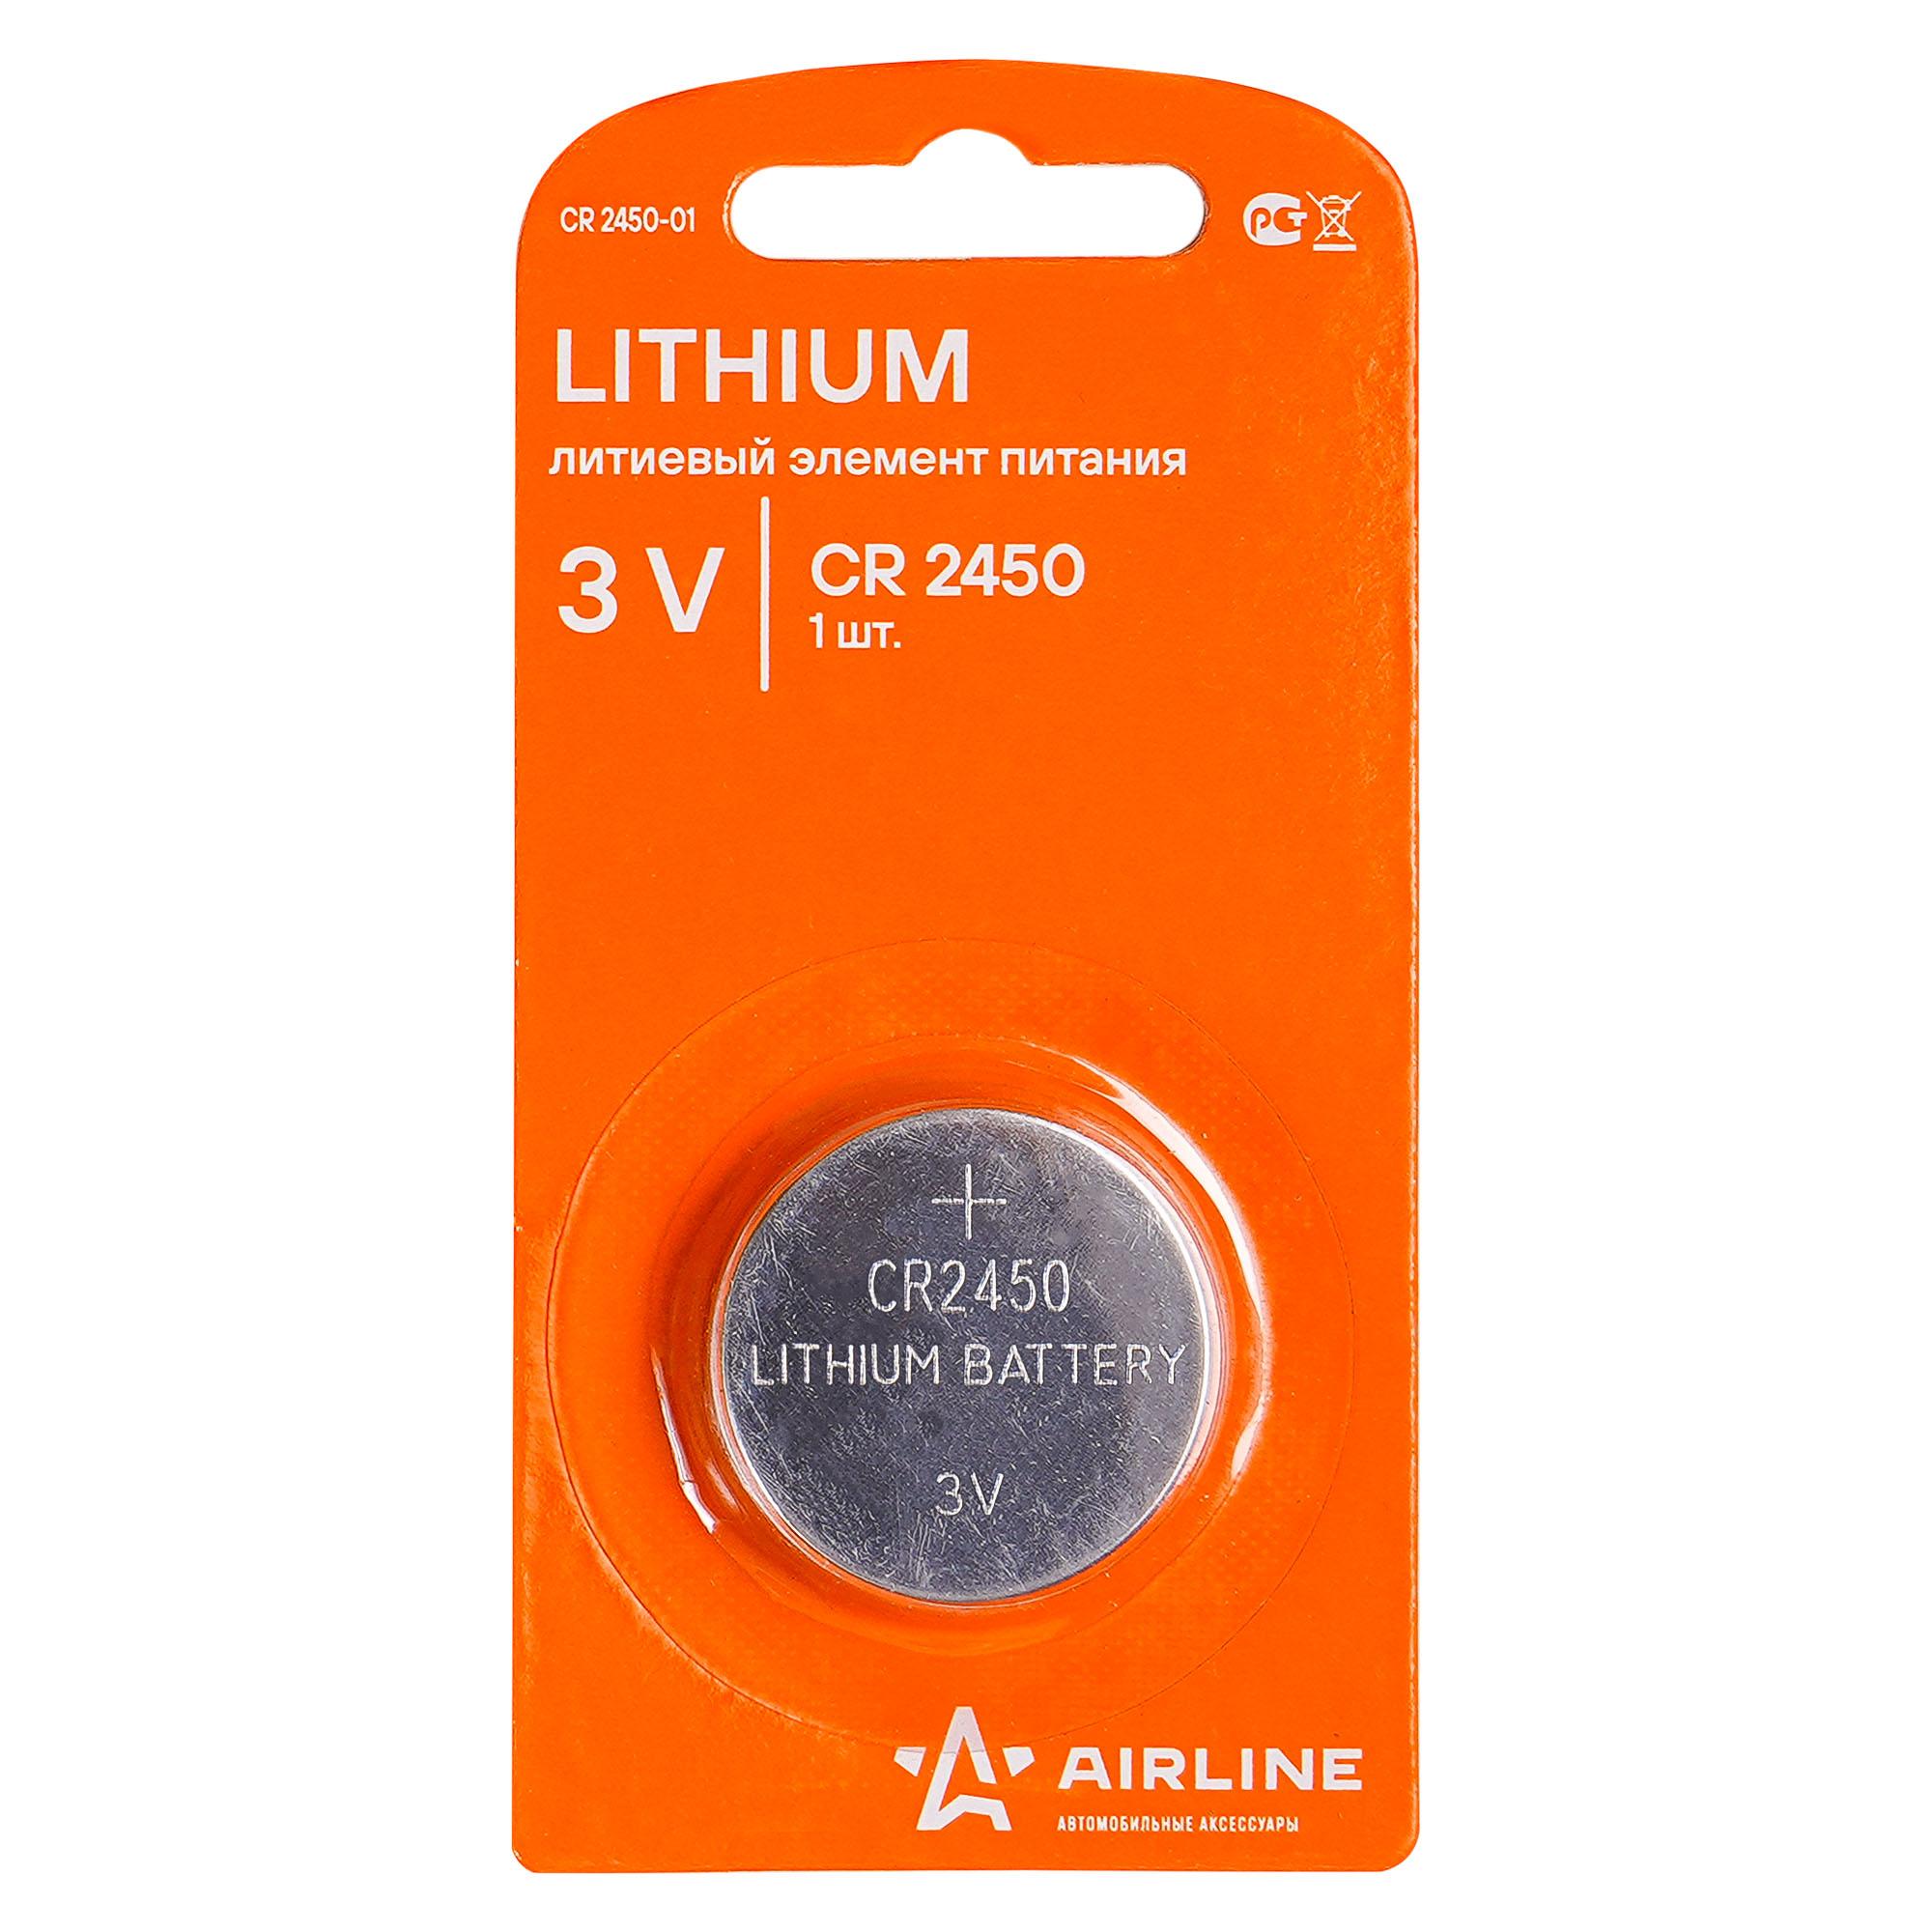 AIRLINE CR245001 Батарейка CR2450 3V для брелоков сигнализаций литиевая 1 шт. (CR2450-01) airline cr163201 батарейка cr1632 3v для брелоков сигнализаций литиевая 1 шт cr1632 01